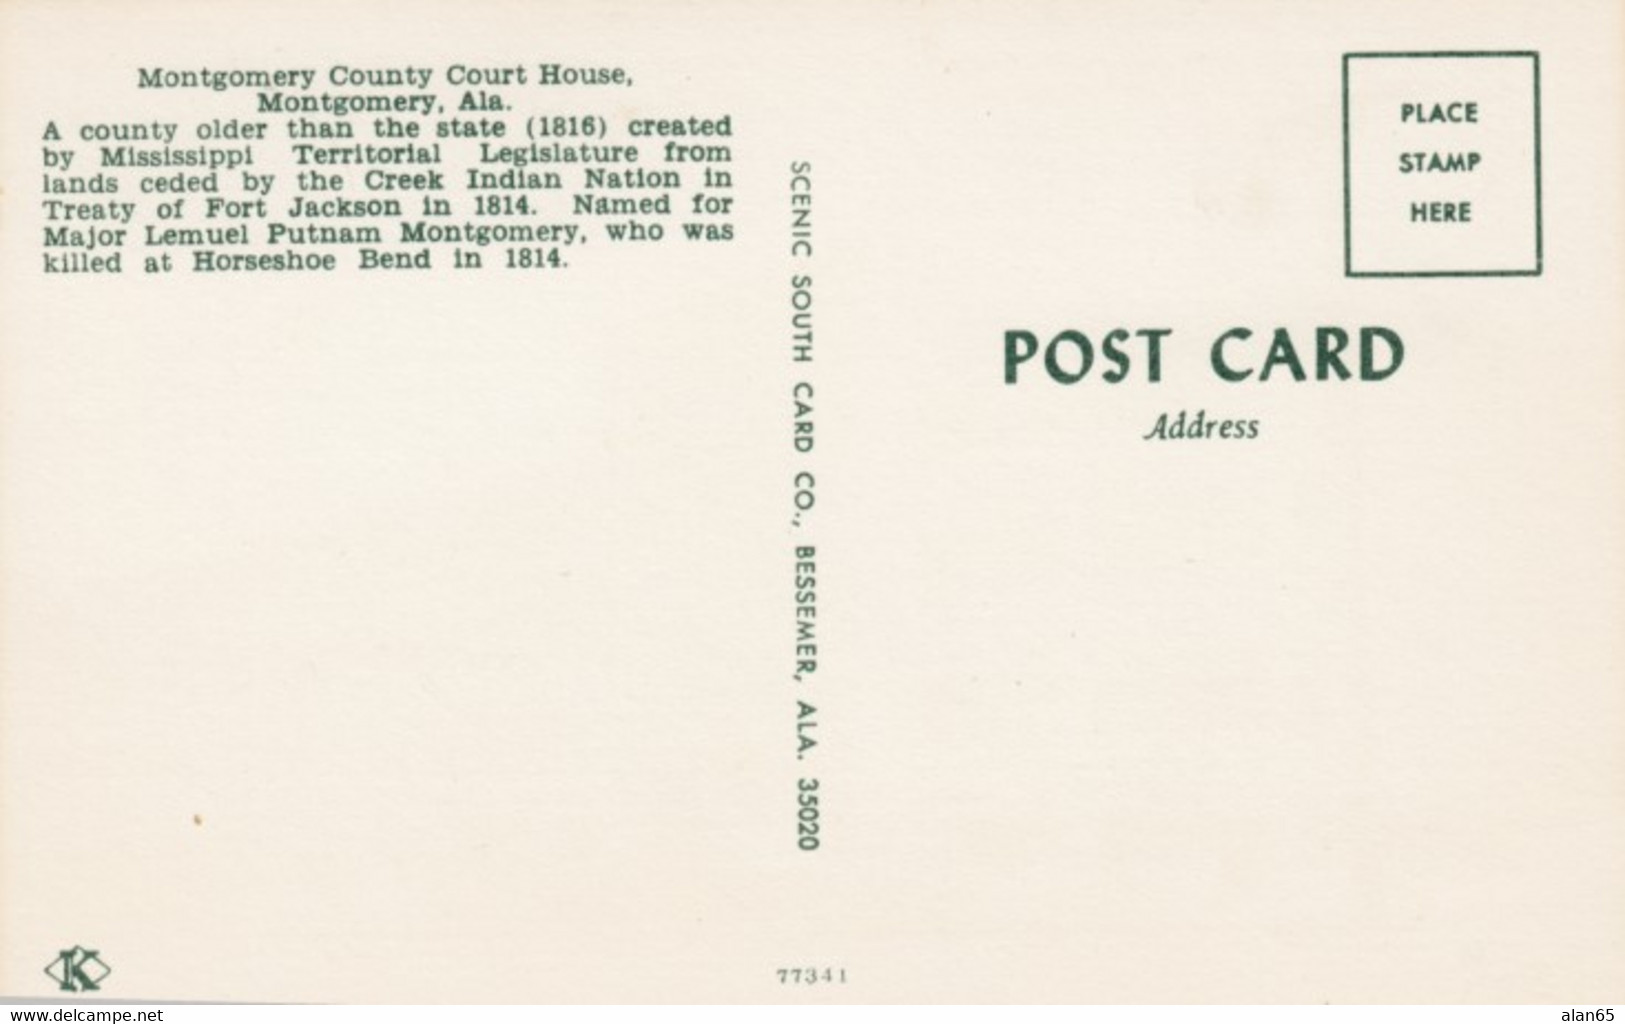 Montgomery Alabama, County Courthouse, Autos, C1960s Vintage Postcard - Montgomery